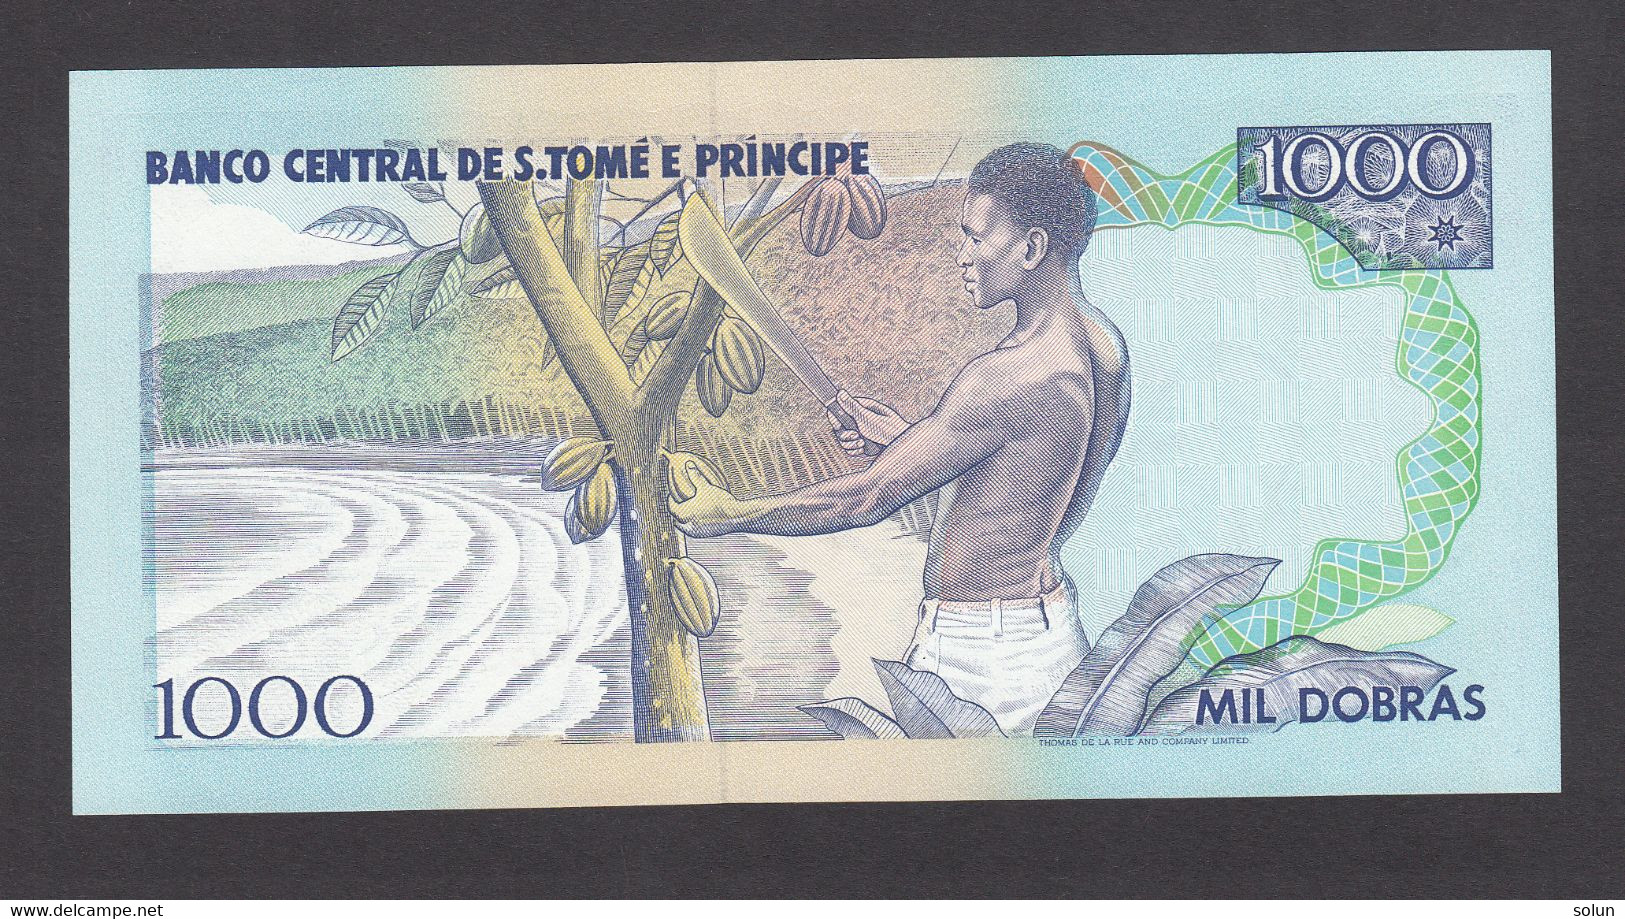 1000 MIL DOBRAS 1993 BANCO CENTRAL DE S.TOME E PRINCIPE BANKNOTE SAO TOME E PRINCIPE - Sao Tome And Principe